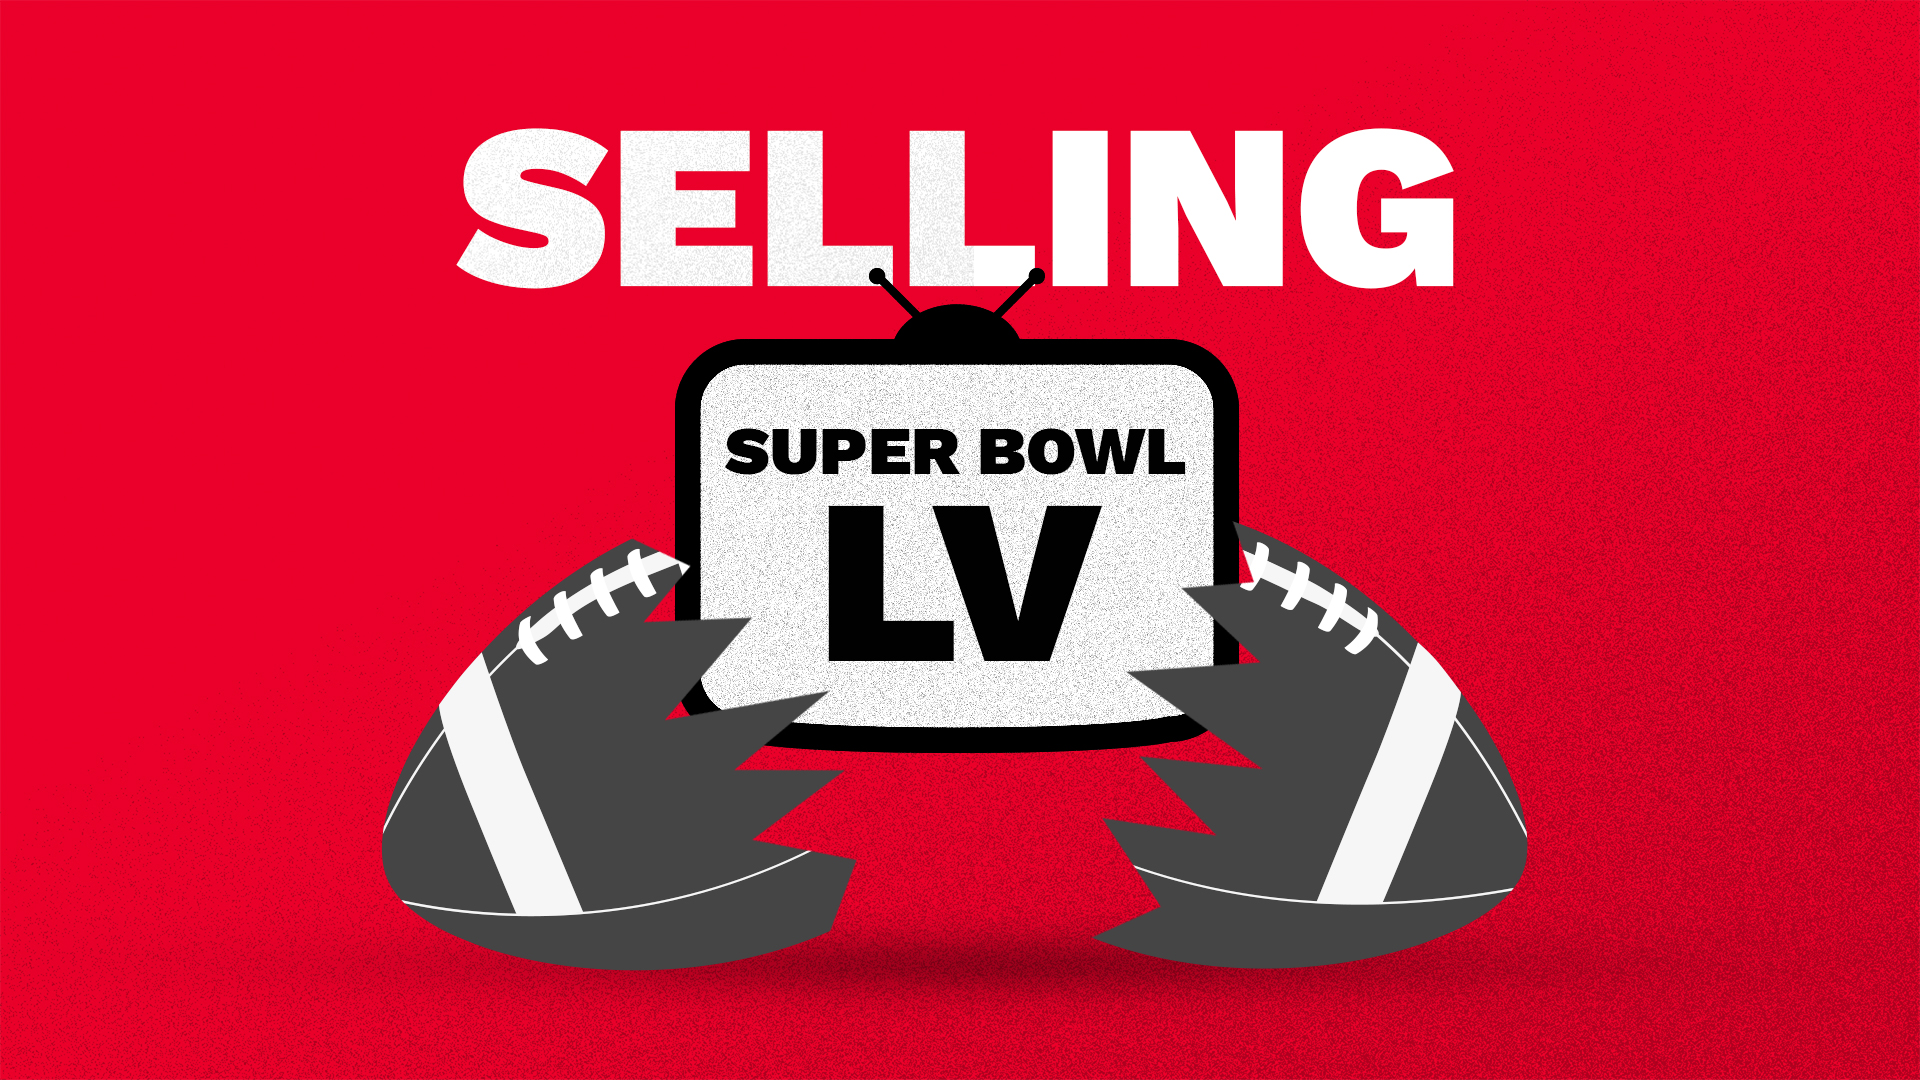 Selling Super Bowl LV